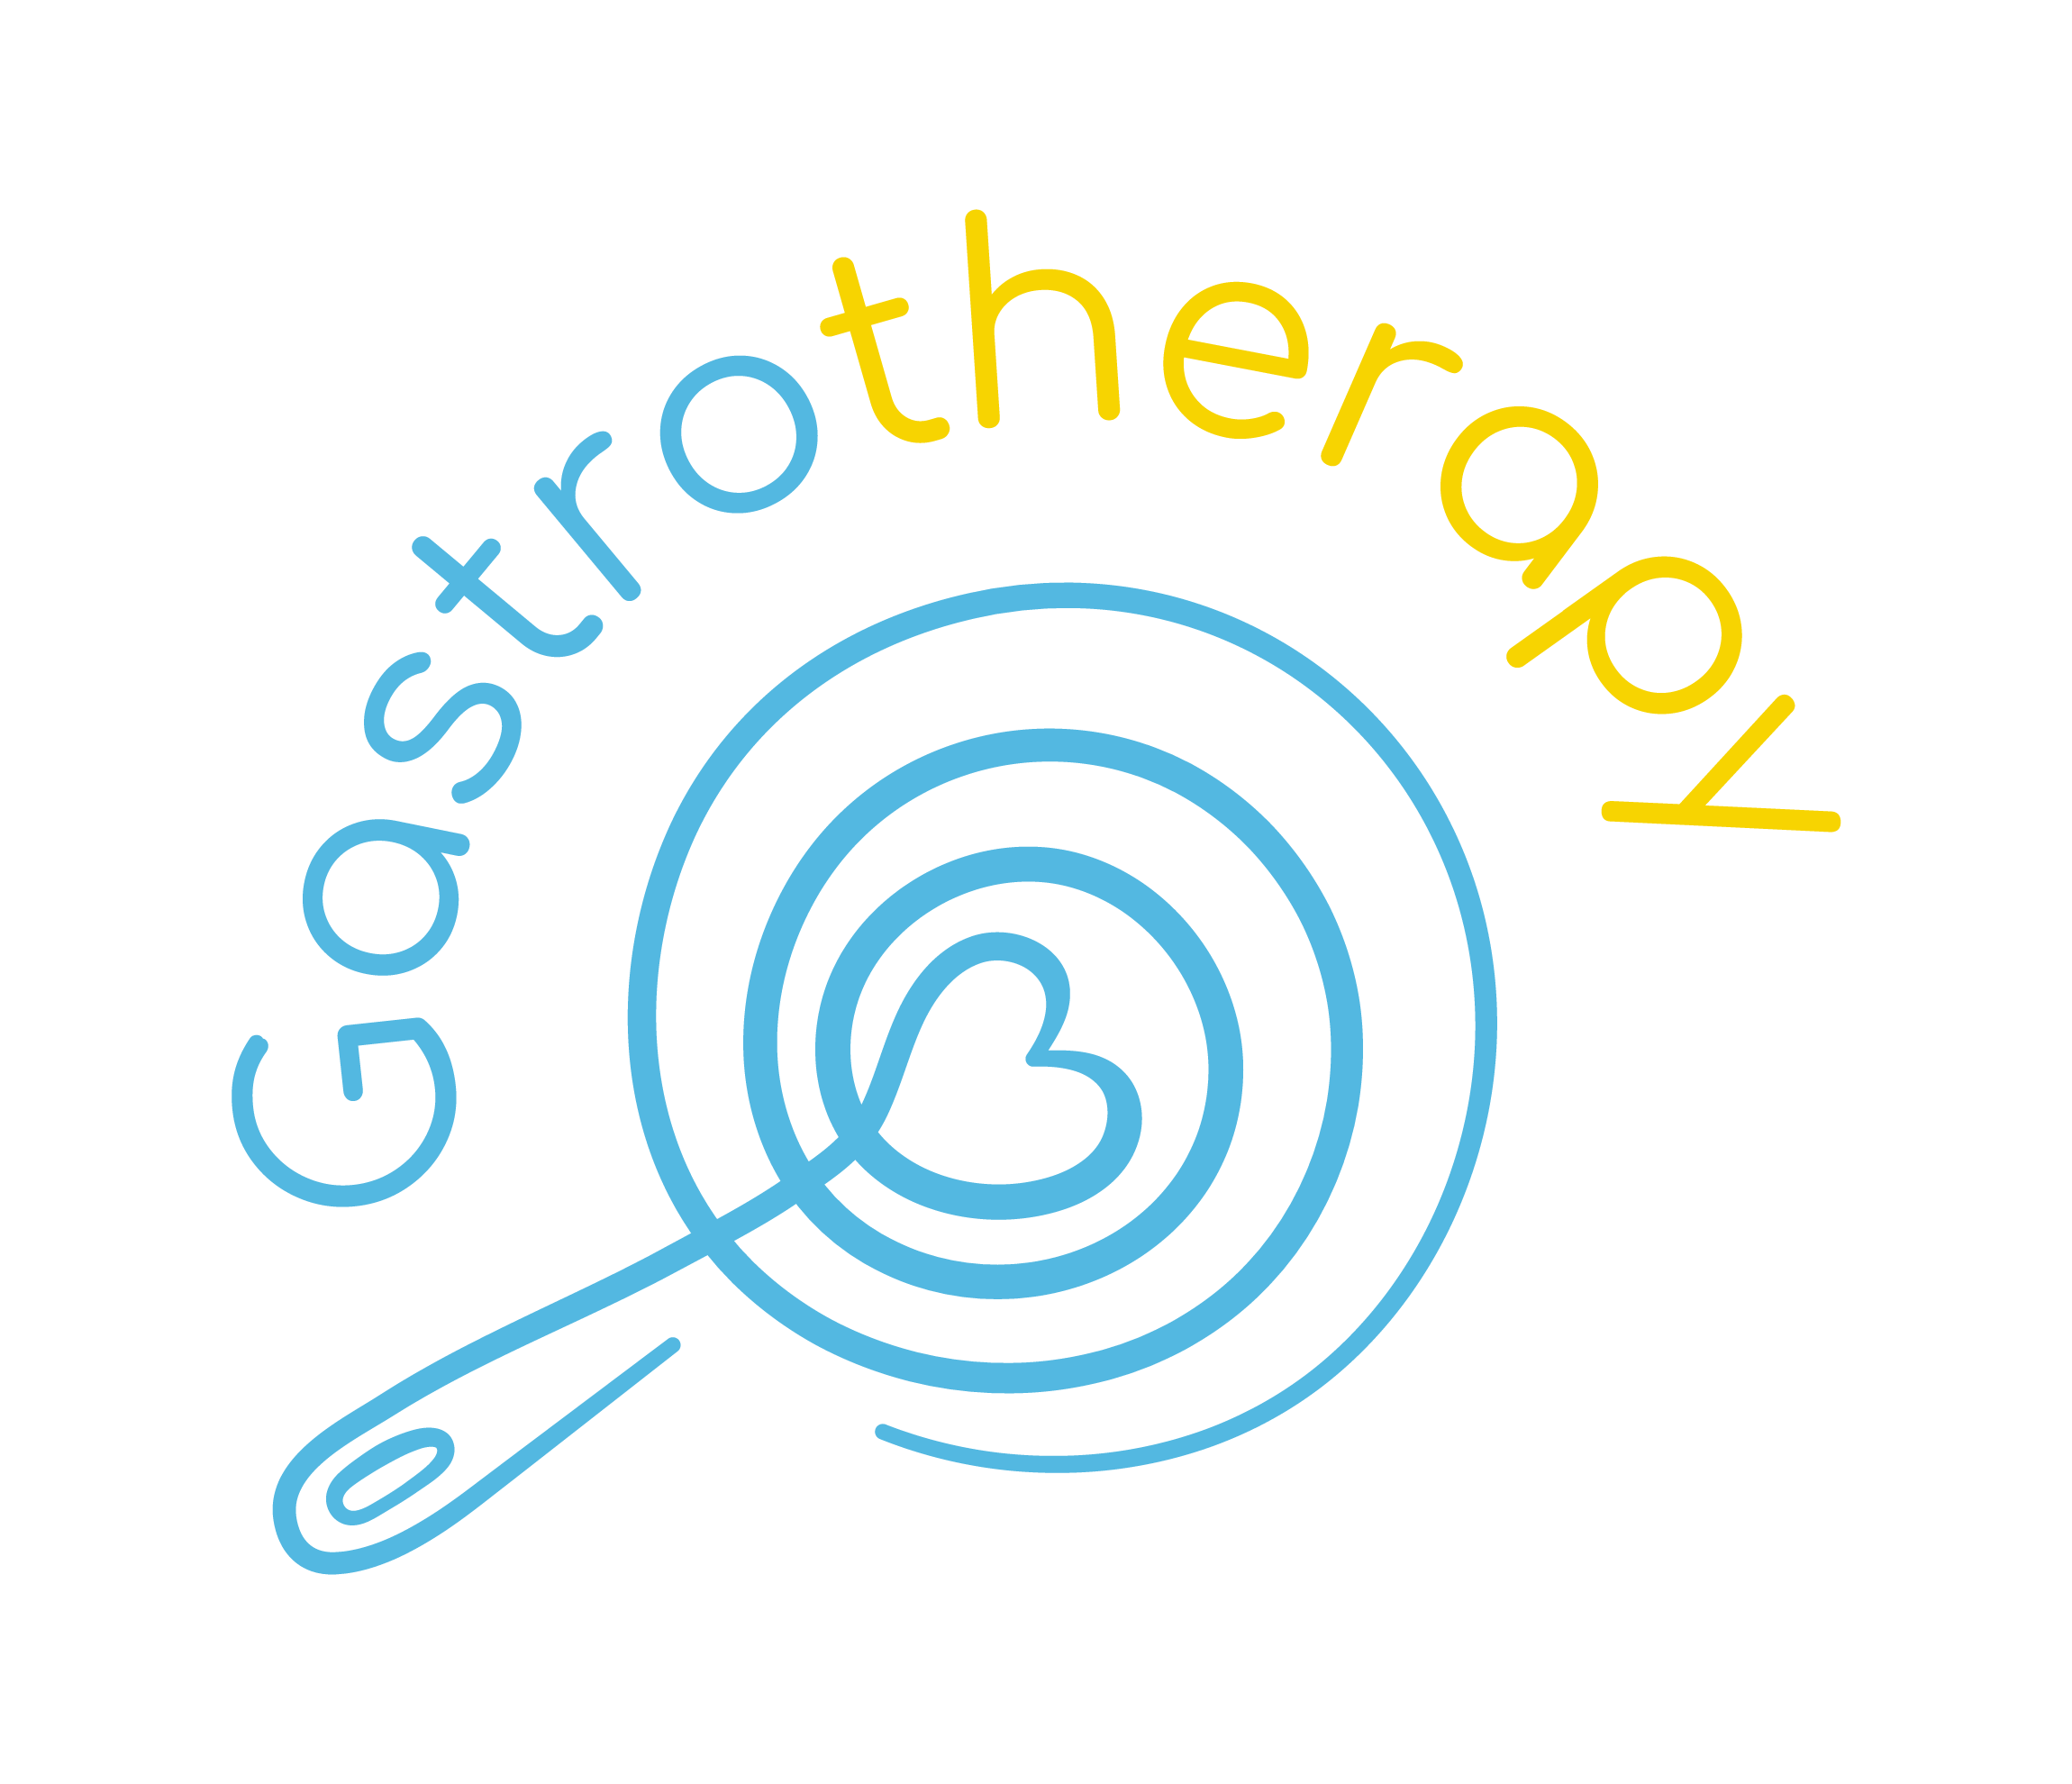 gastrotherapylogo4.png